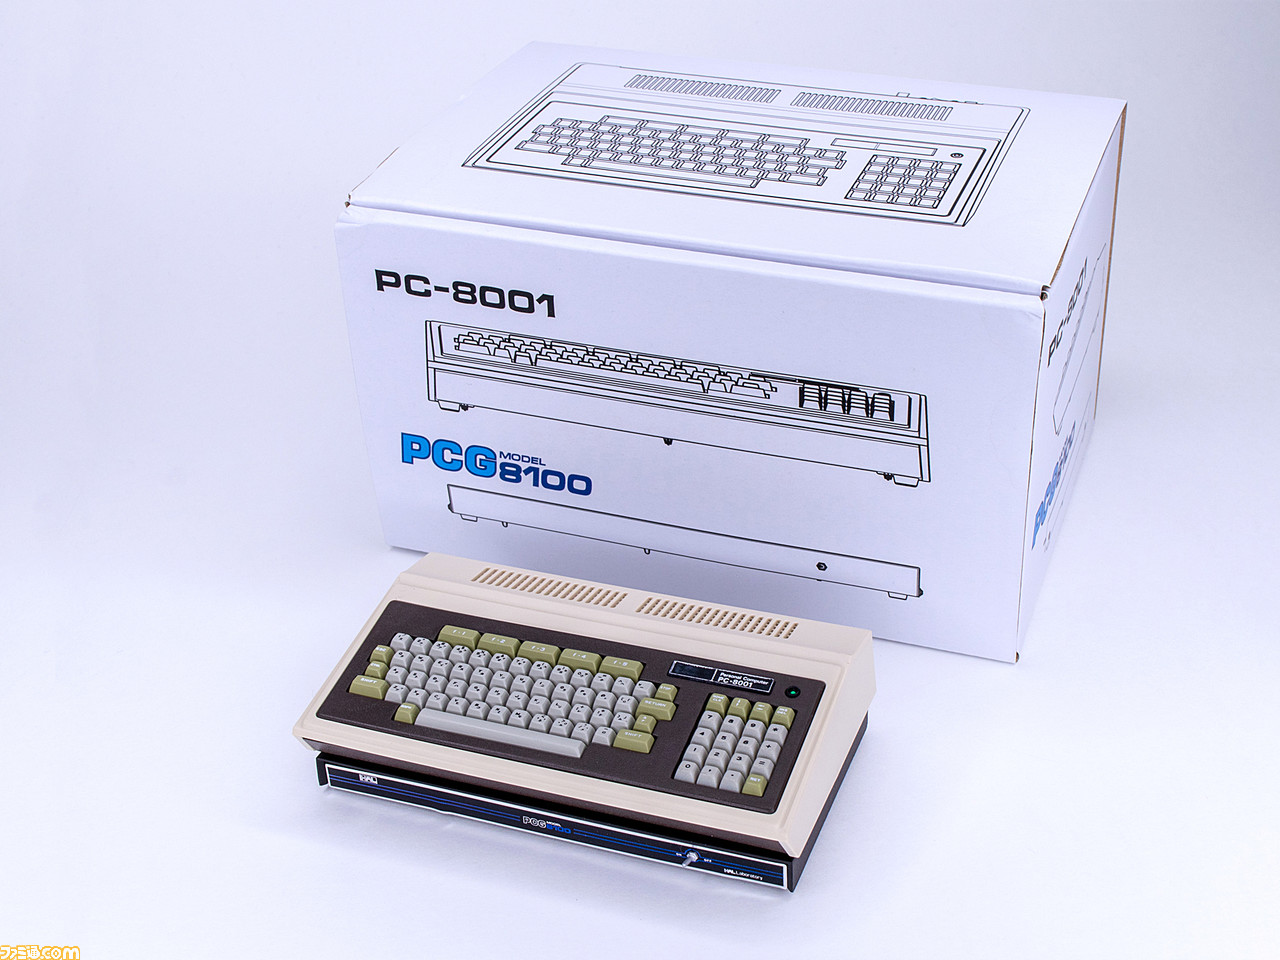 PasocomMini PC-8001 PCGセット”『スーパーギャラクシアン』など1980